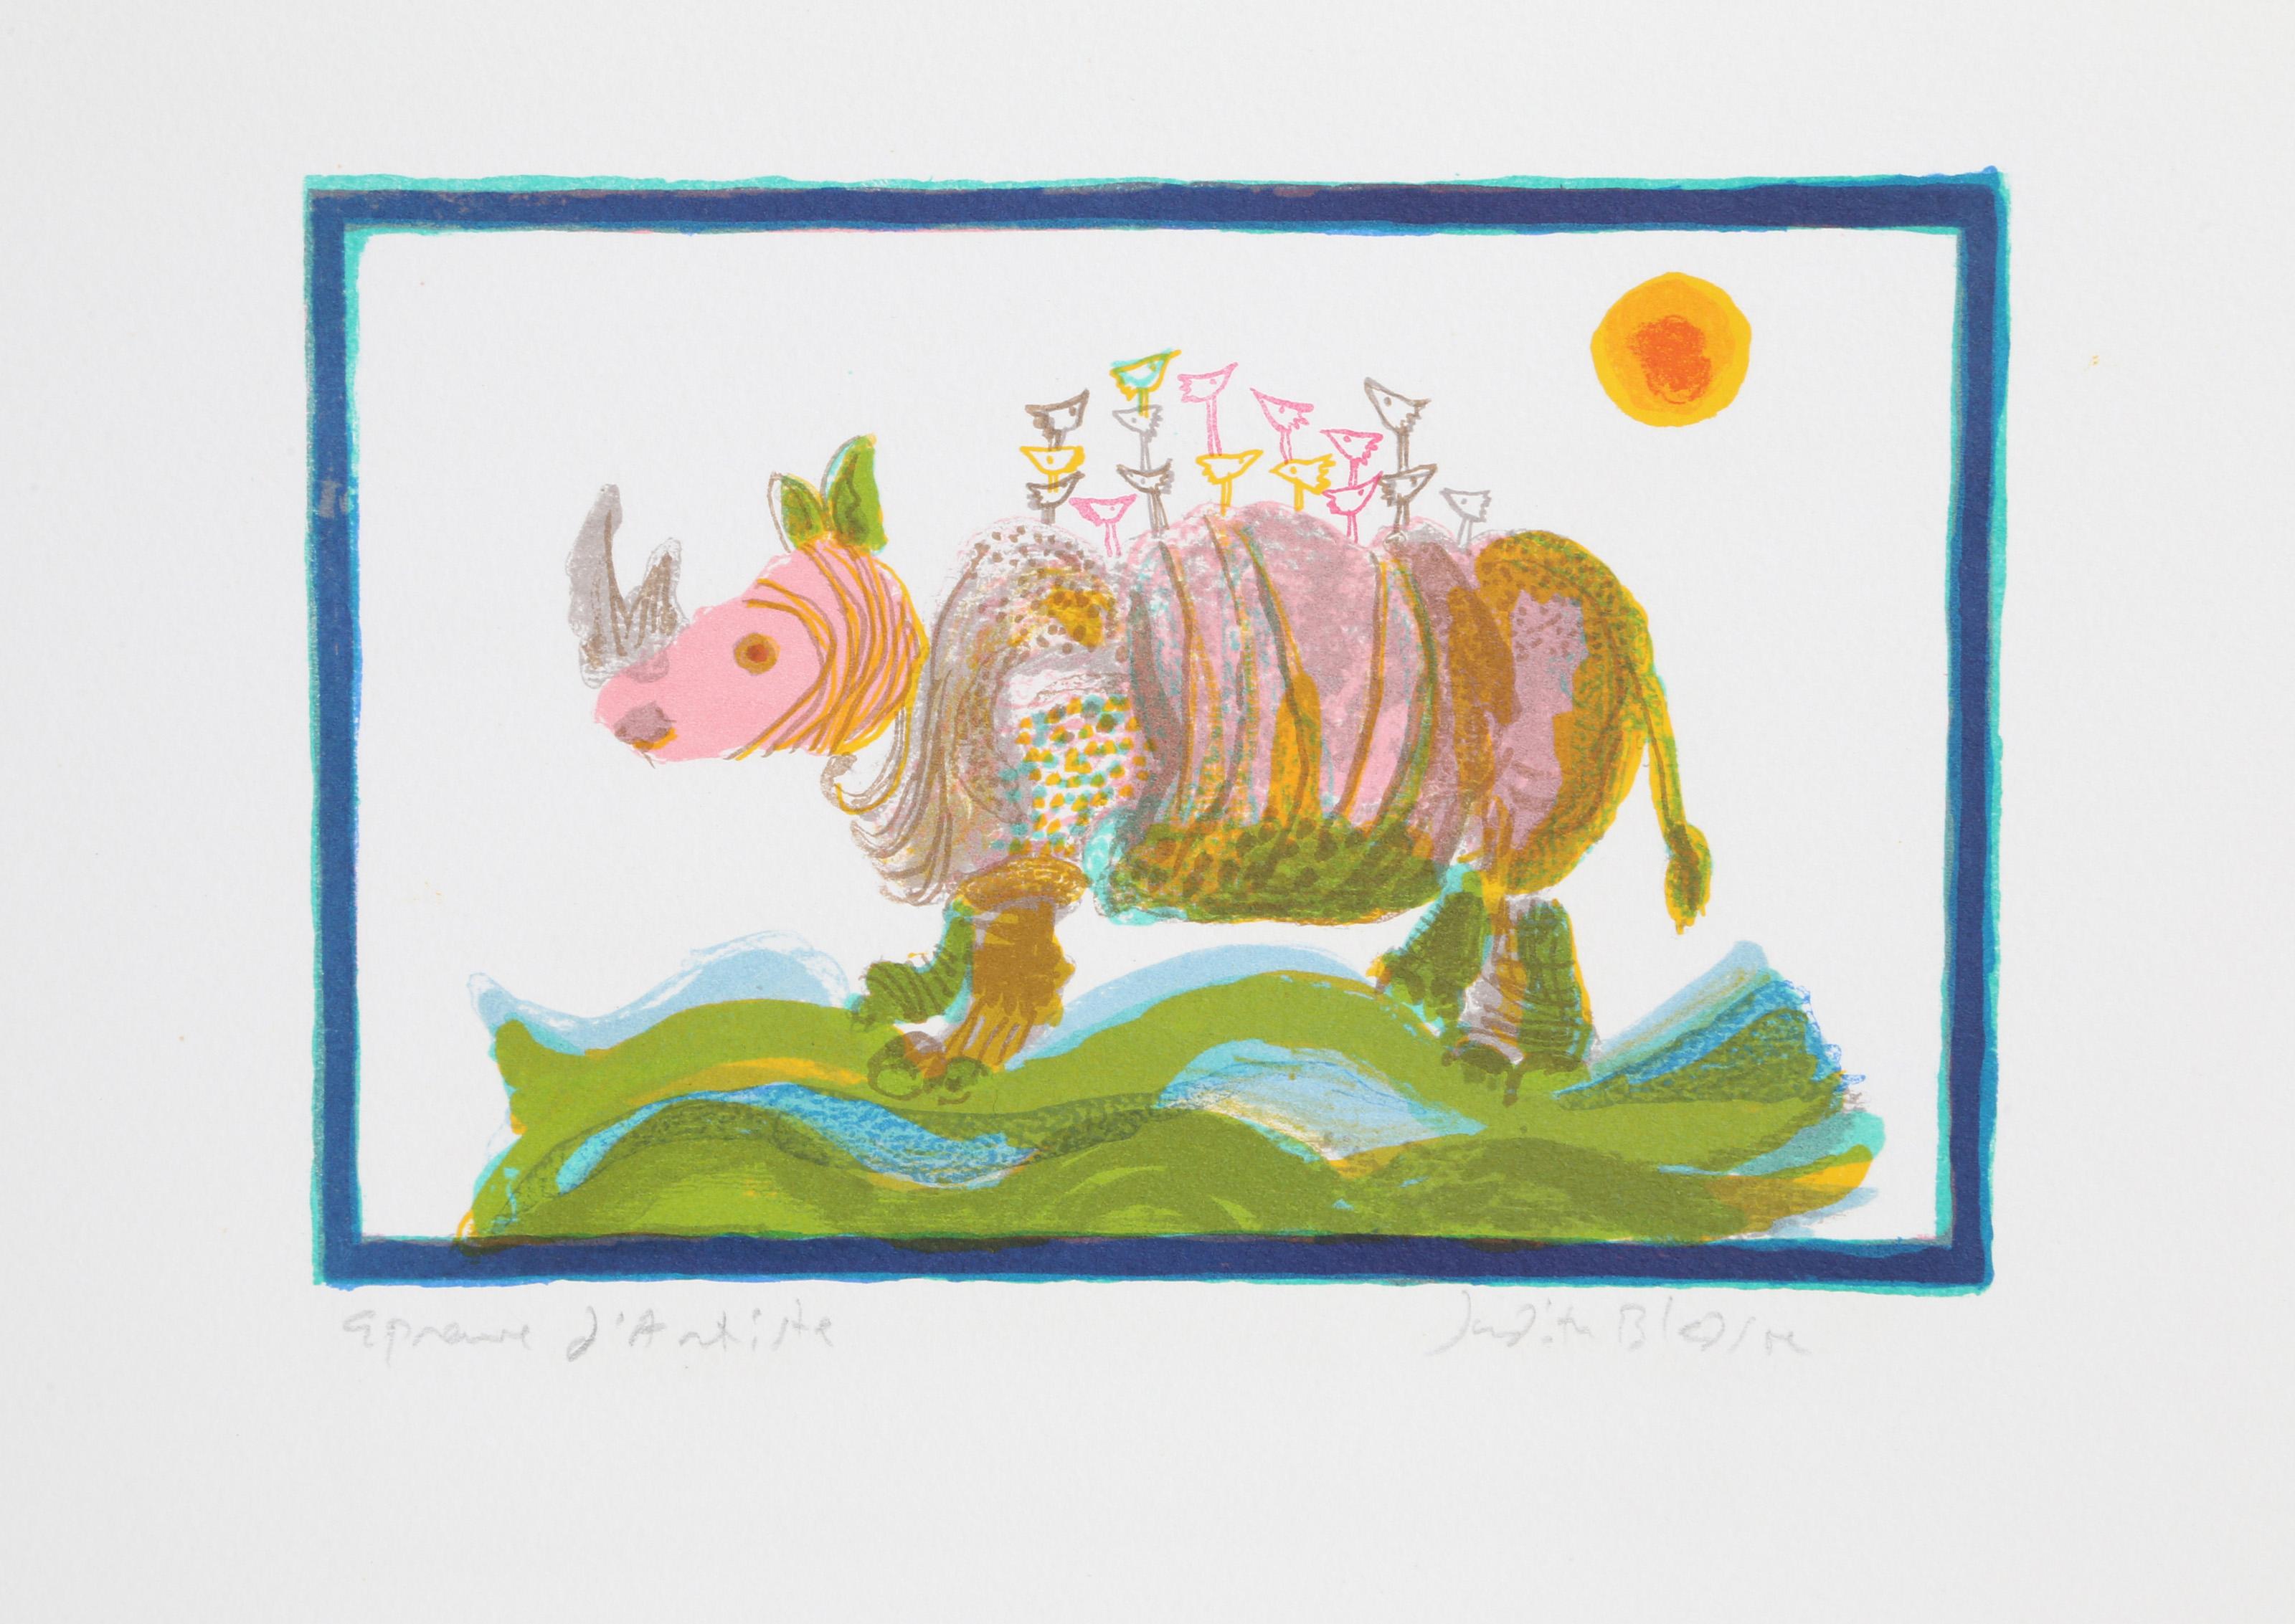 Judith Bledsoe, American (1938 - 2013) -  Rhino. Year: circa 1974, Medium: Lithograph, signed in pencil, Edition: EA, Image Size: 6 x 8 inches, Size: 10.5  x 15 in. (26.67  x 38.1 cm), Description: Walking across the arid savanna landscape, a rhino